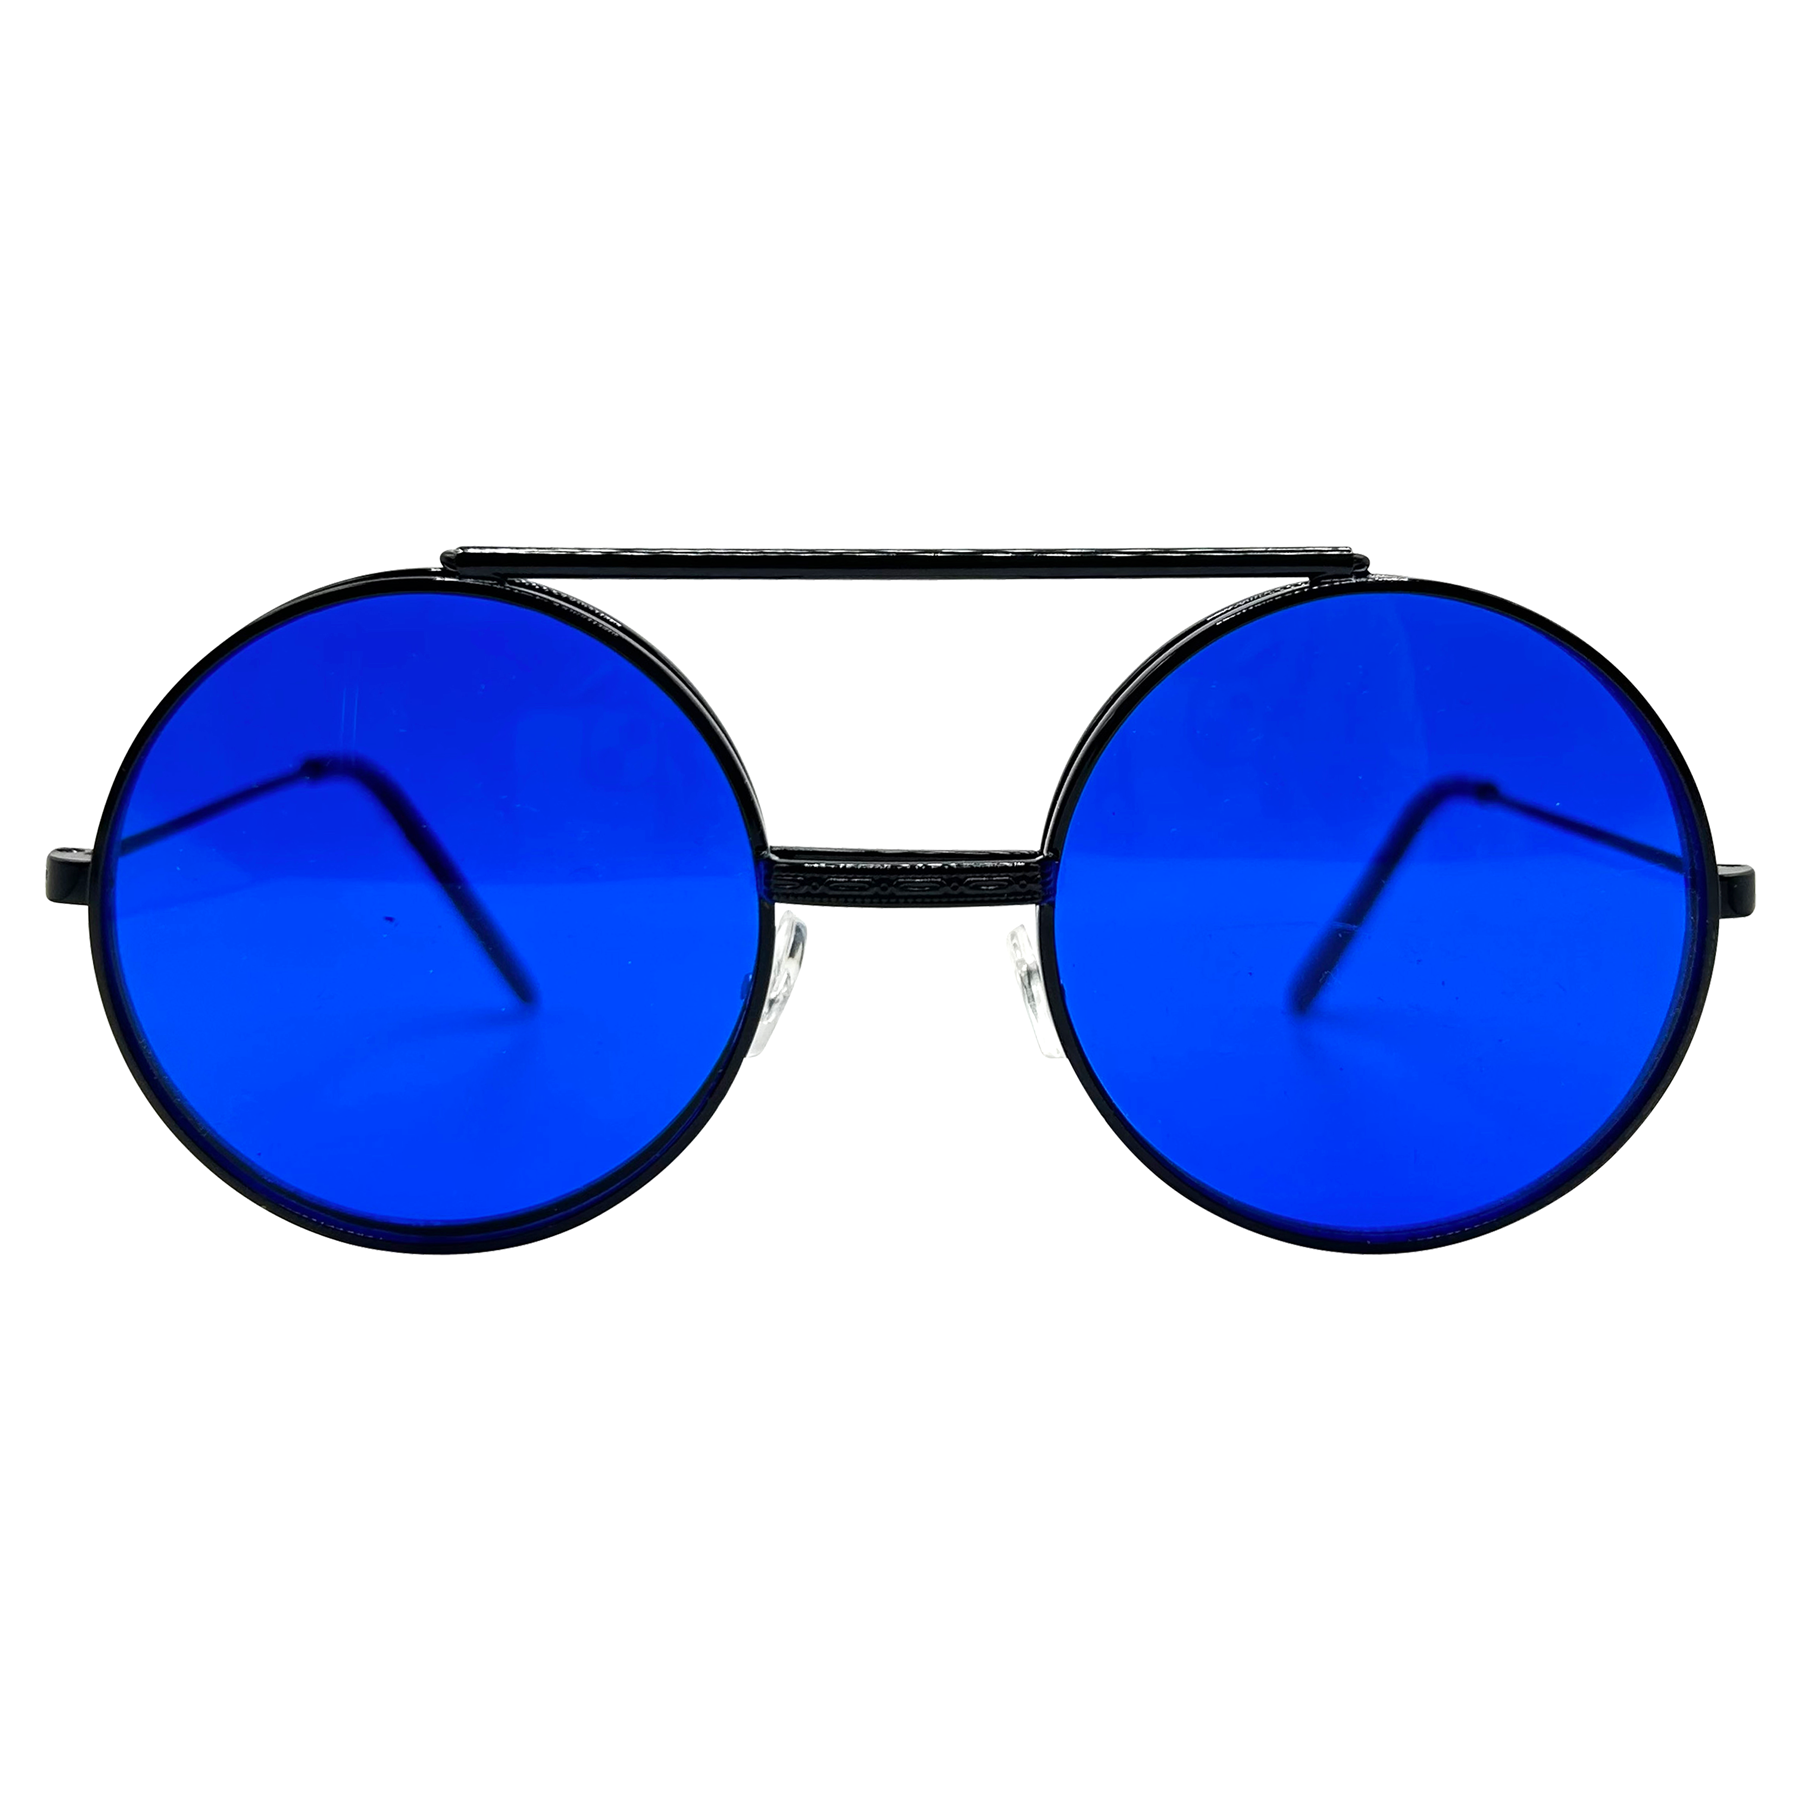 FLIP-CO Black/Blue Flip-Up Sunglasses